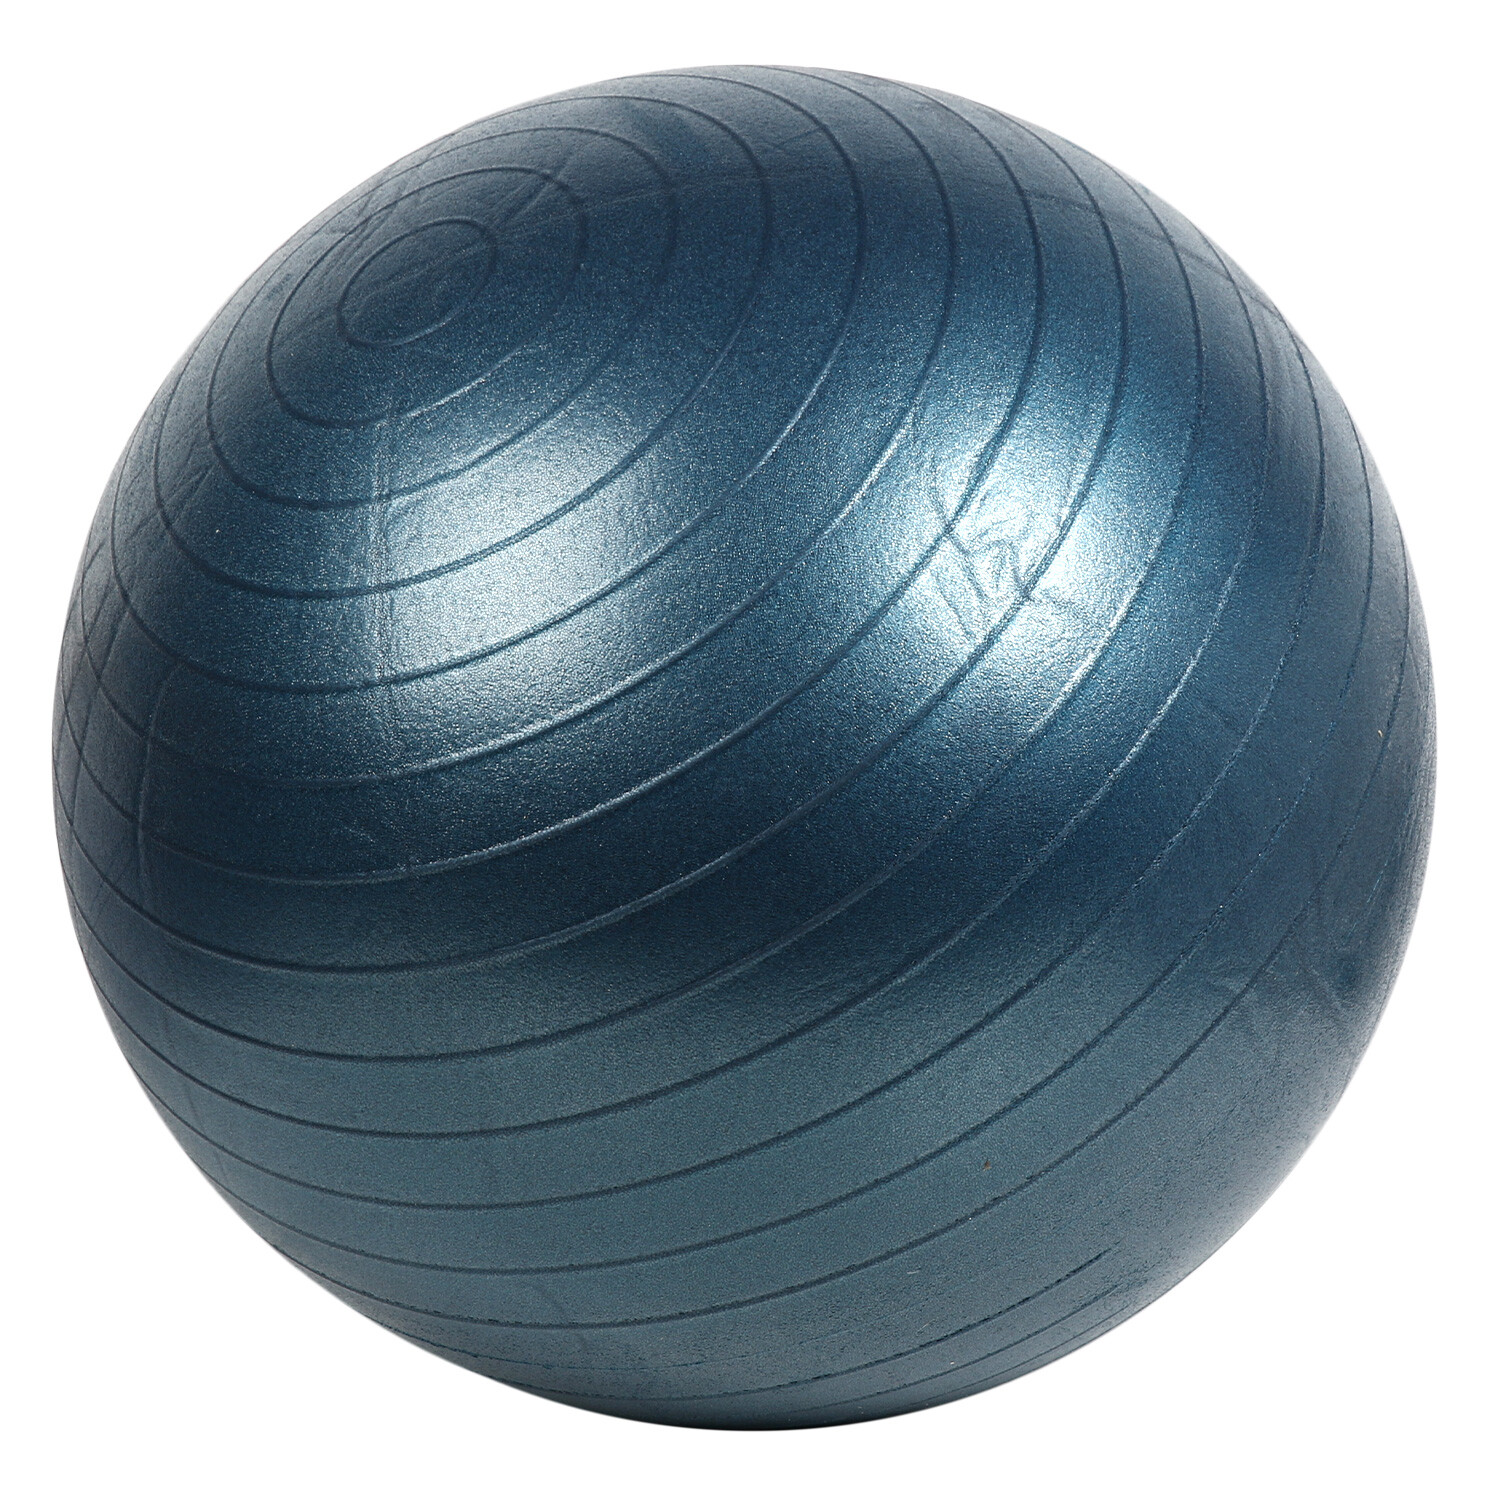 Active Sport 65cm Yoga Ball - Blue Image 2